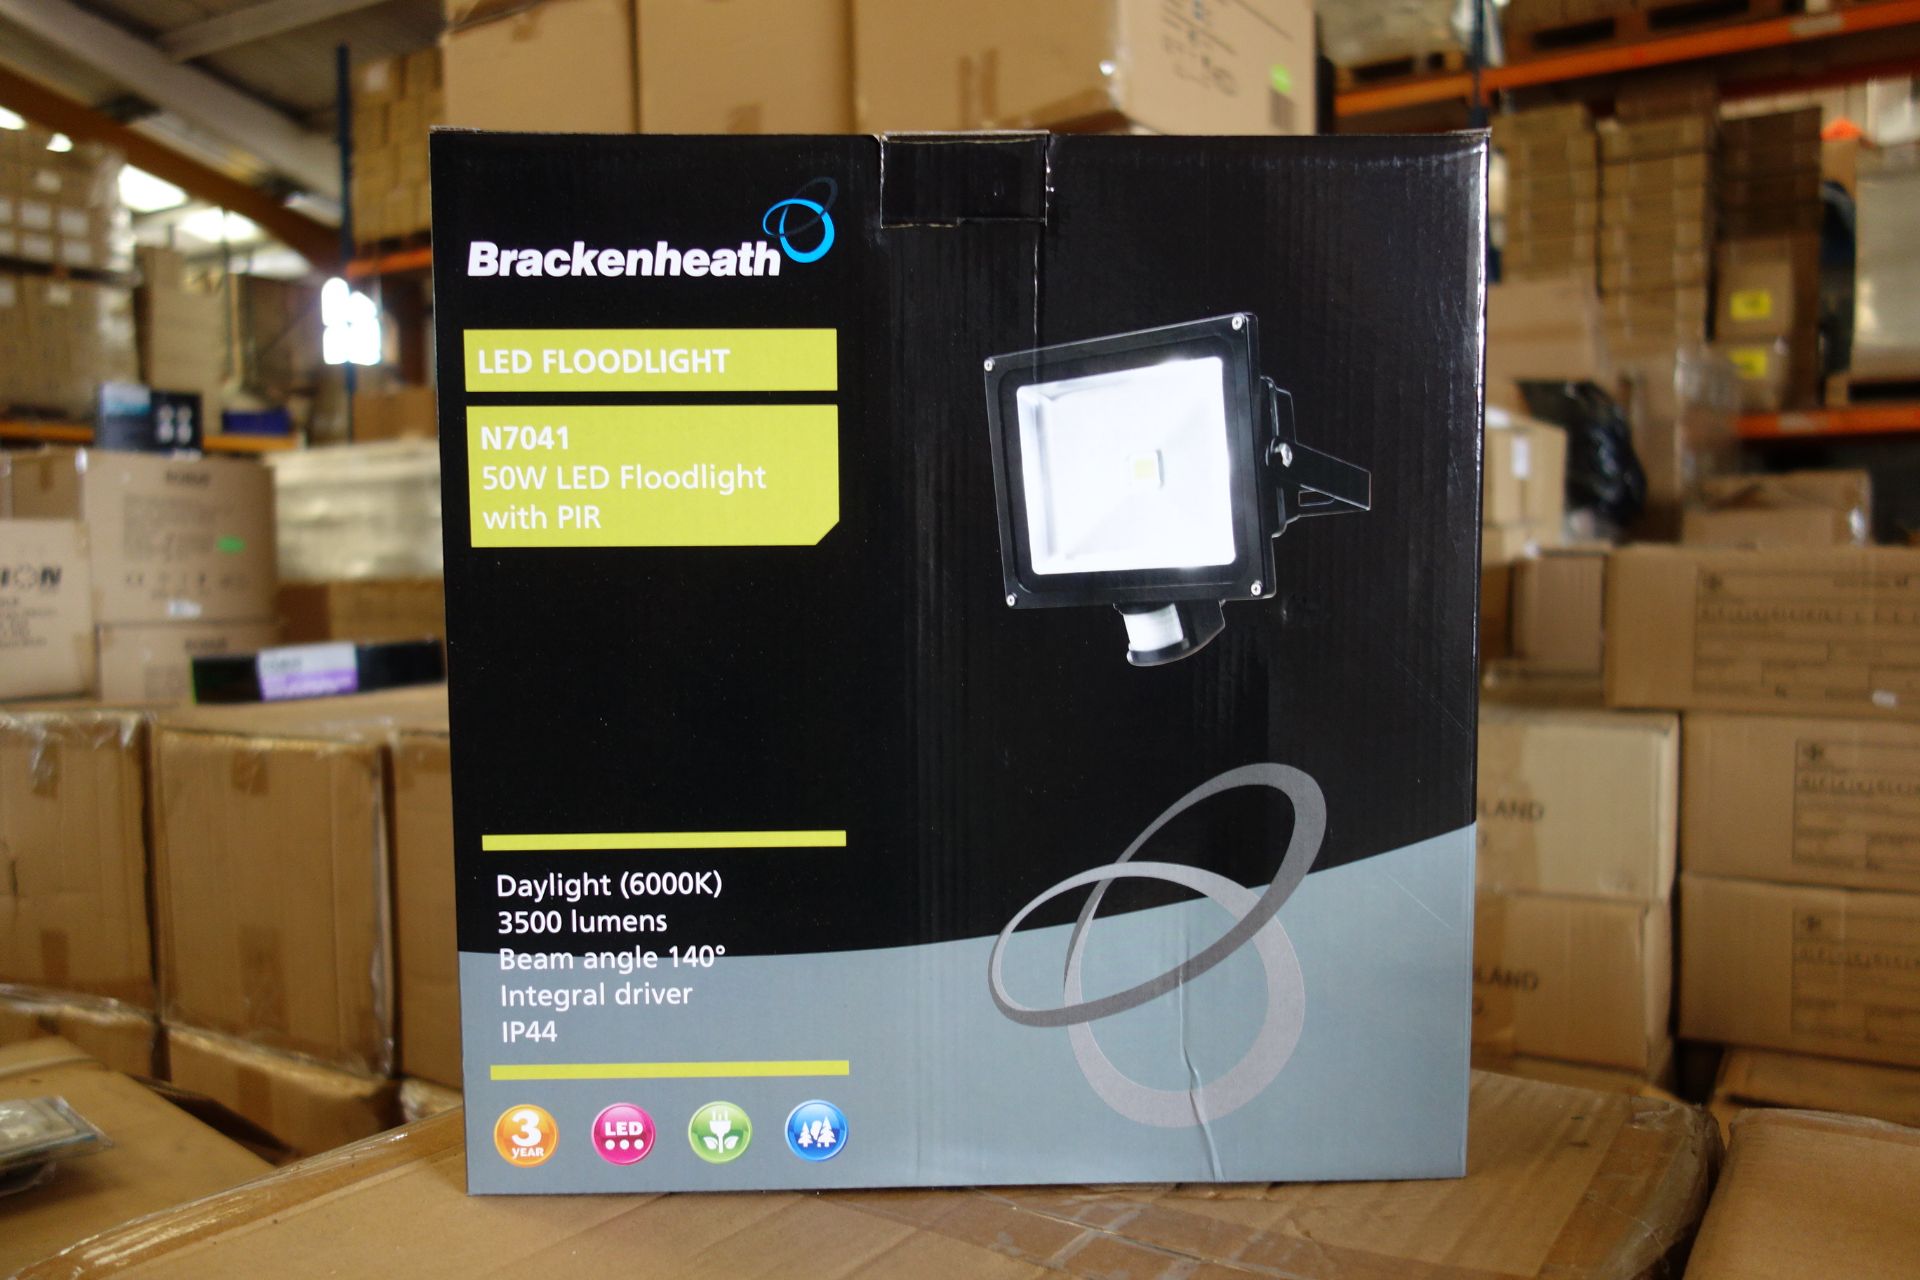 4 X Brakenheath 50W LED Floodlight With PIR